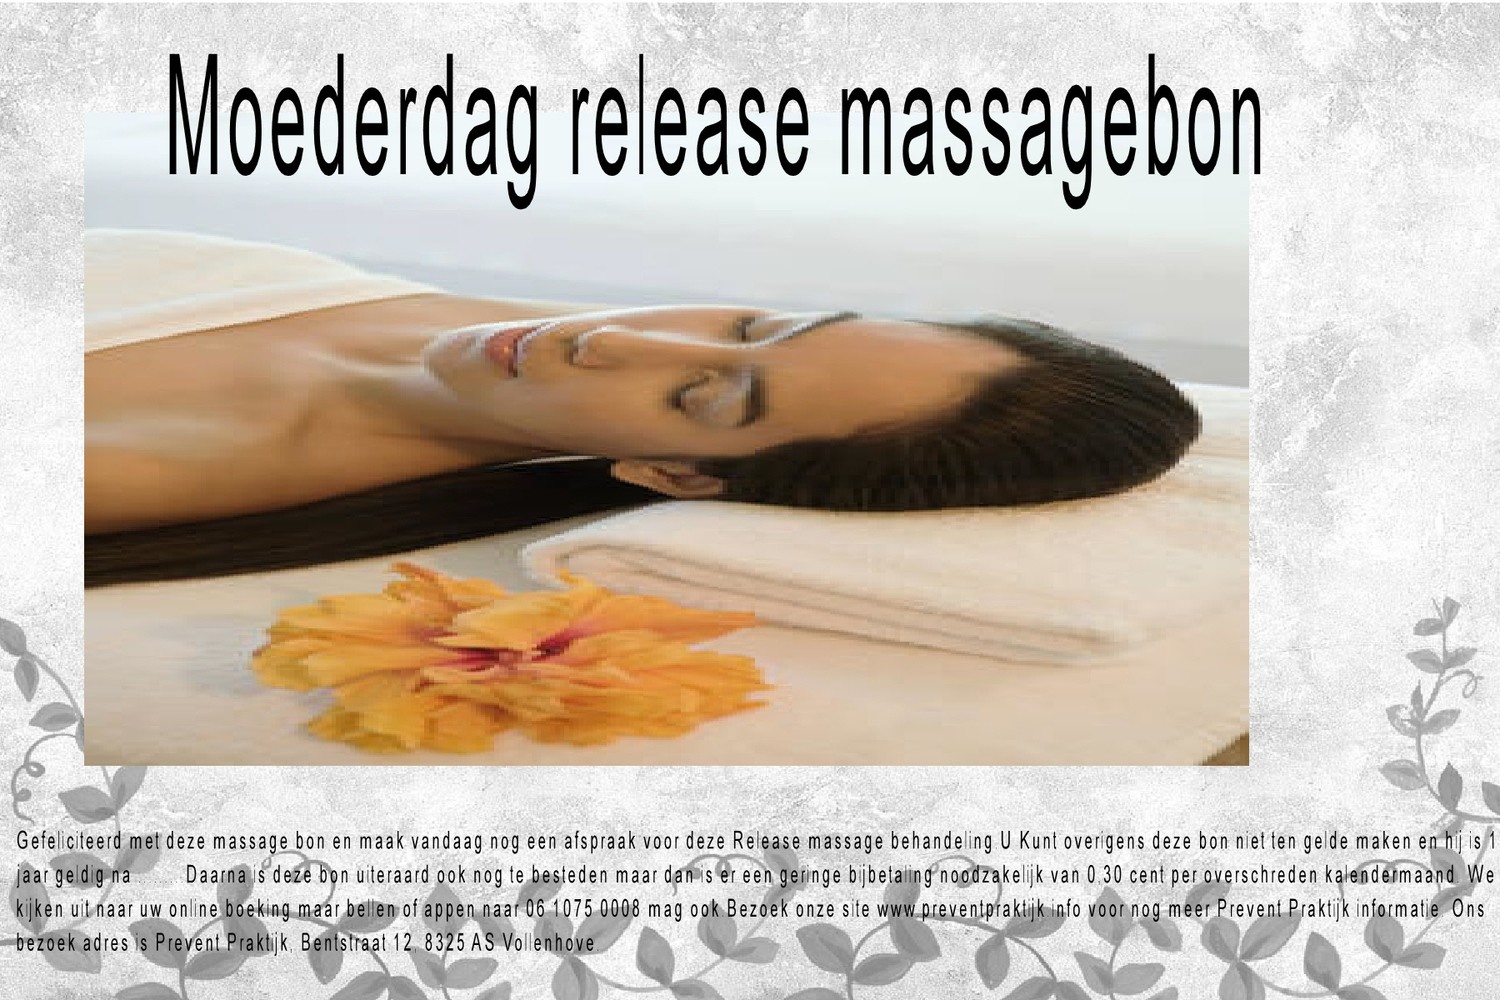 Body stress release massage bon 
             (MOEDERDAG).